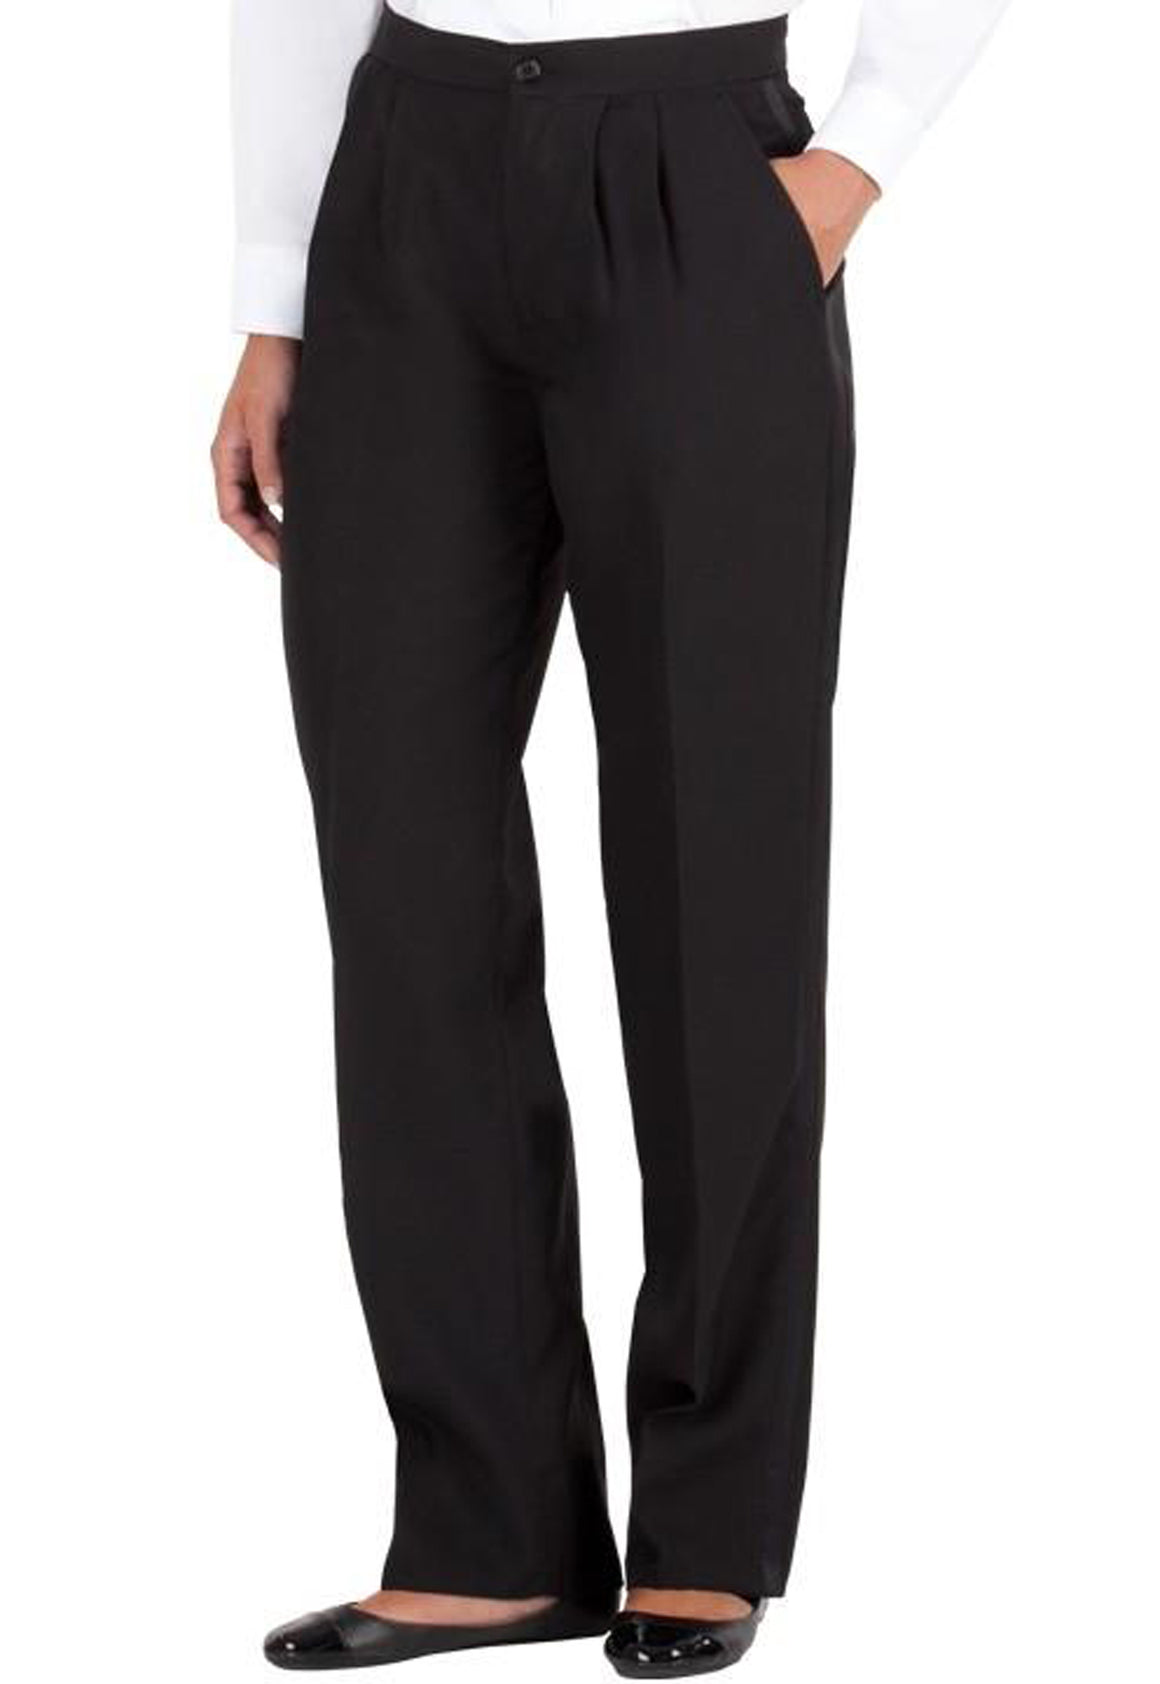 H&M Women's Black Dress Pants Skinny Leg Side Zip Size 8 | eBay